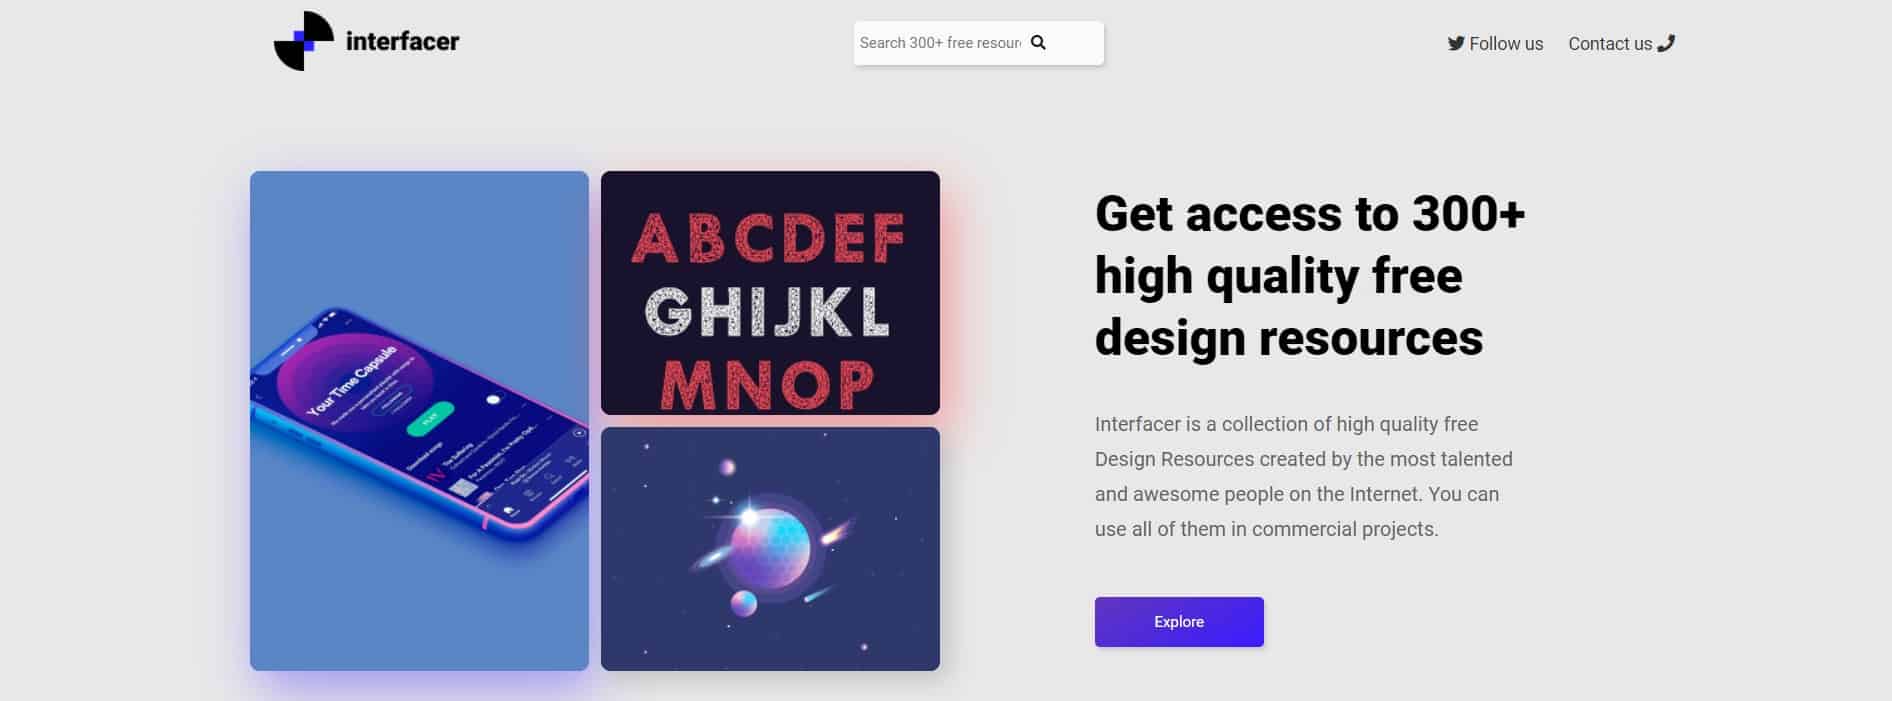 Interfacer: 300+ free design resources